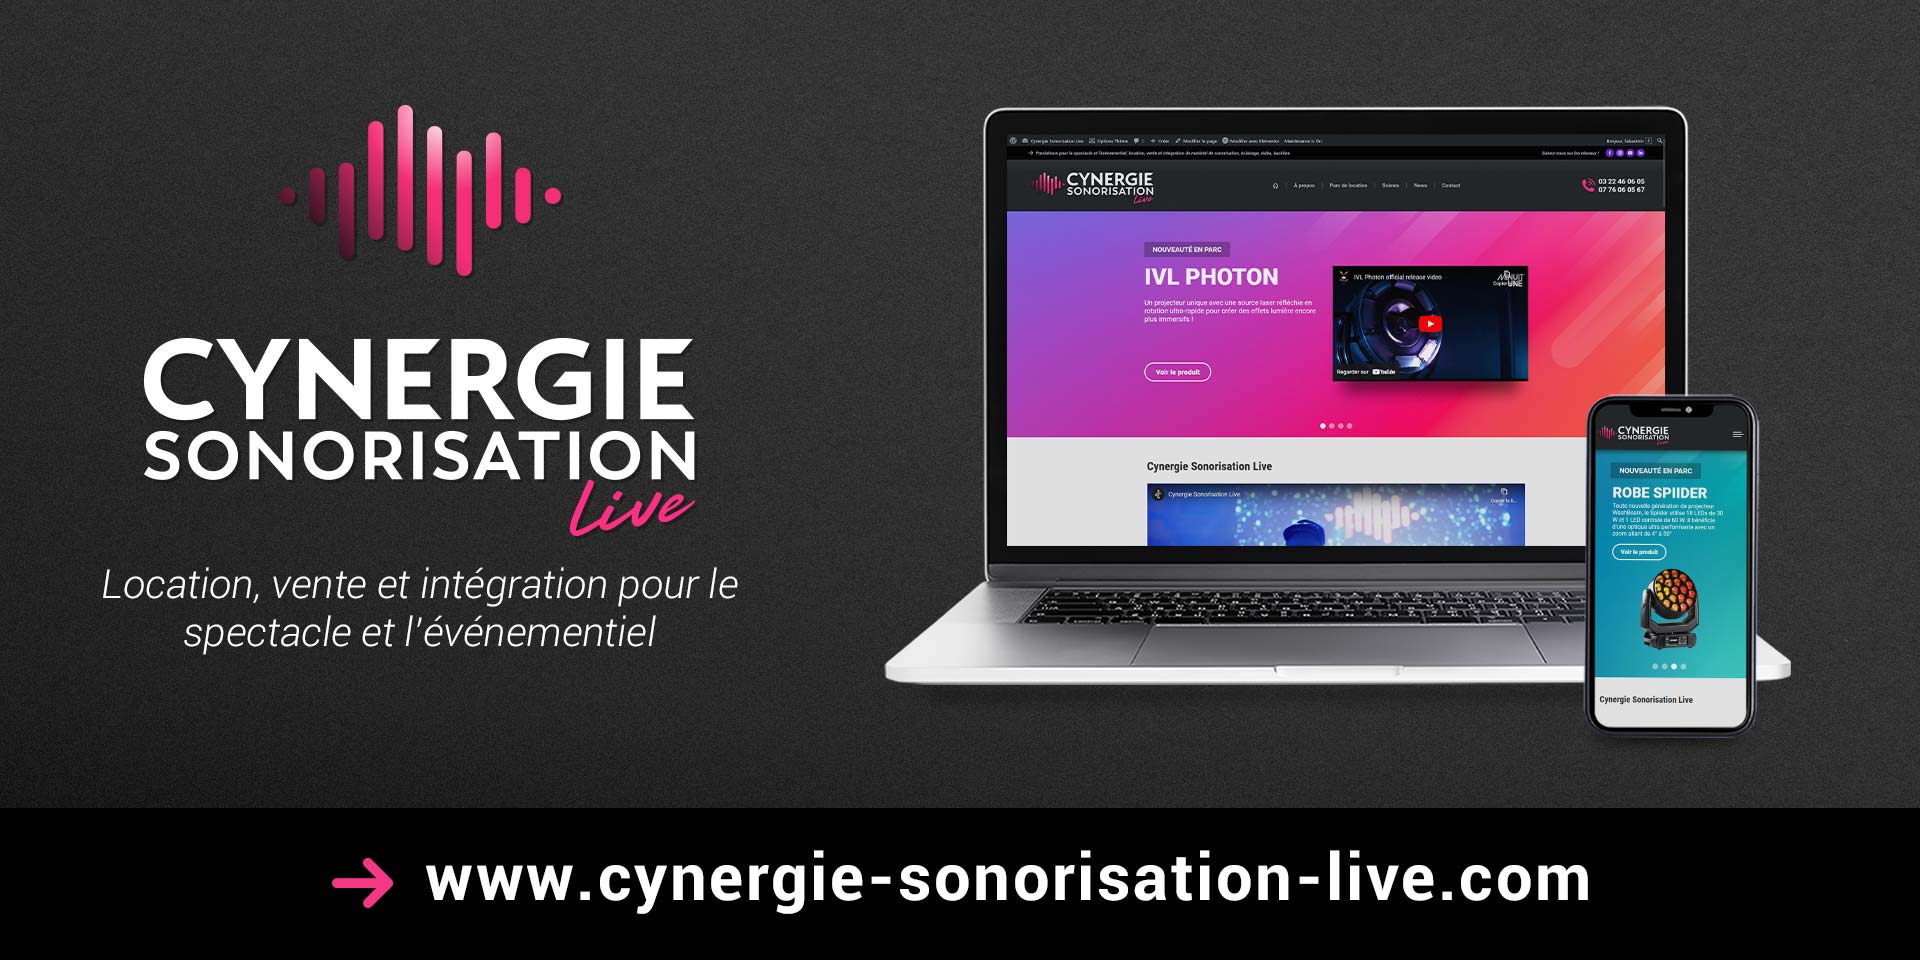 (c) Cynergie-sonorisation-live.com